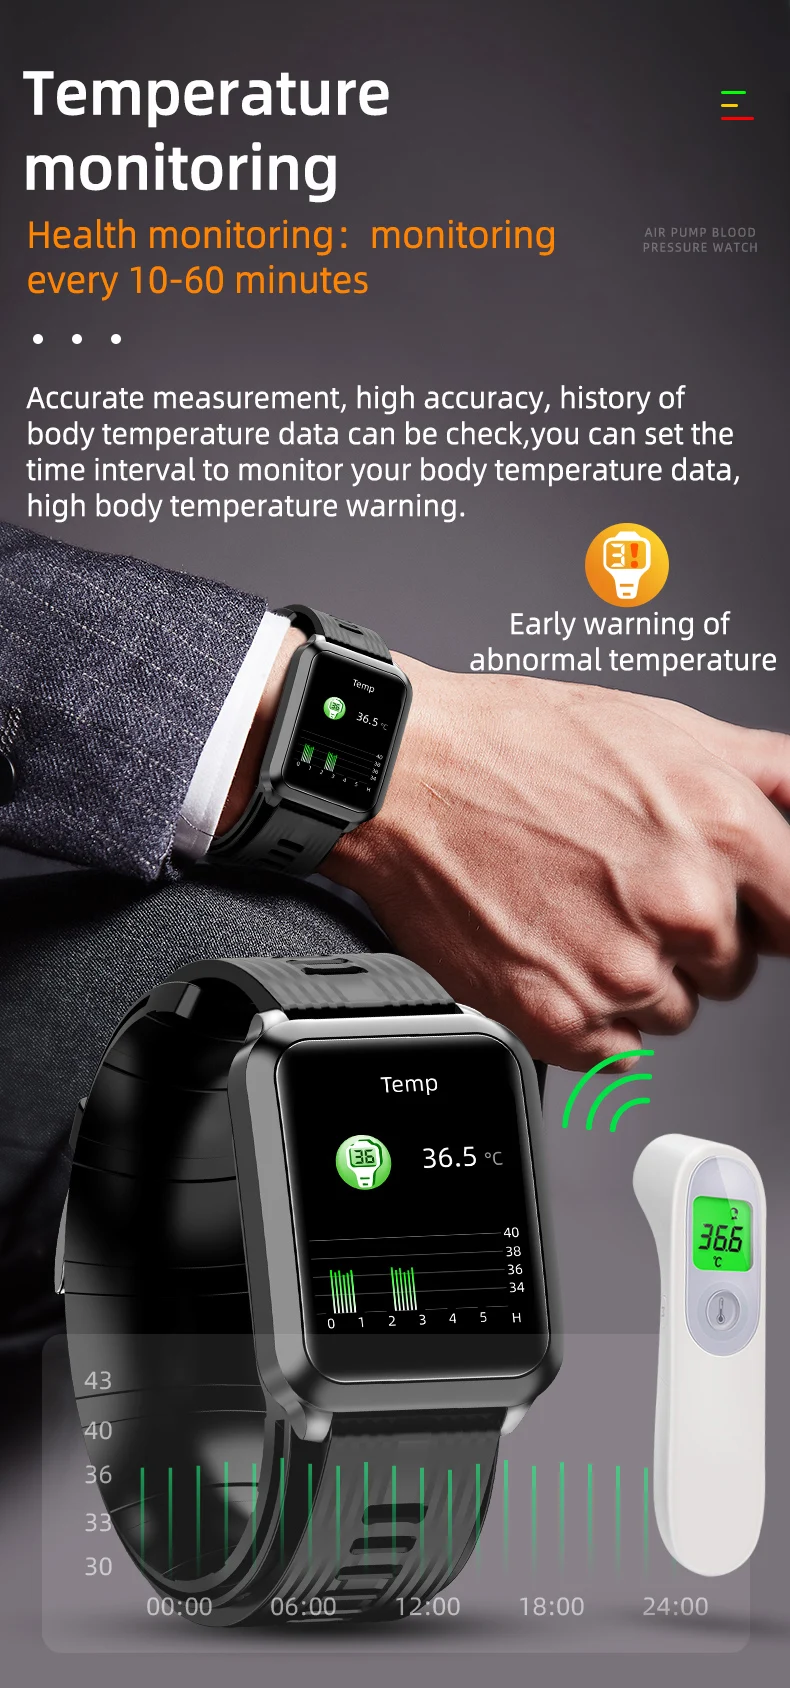 2022 New Arrival P60 Medical Grade Portable Accurate Air Pump Air Bag Blood Pressure Heart Rate Monitor Health Smart Watch (9).jpg